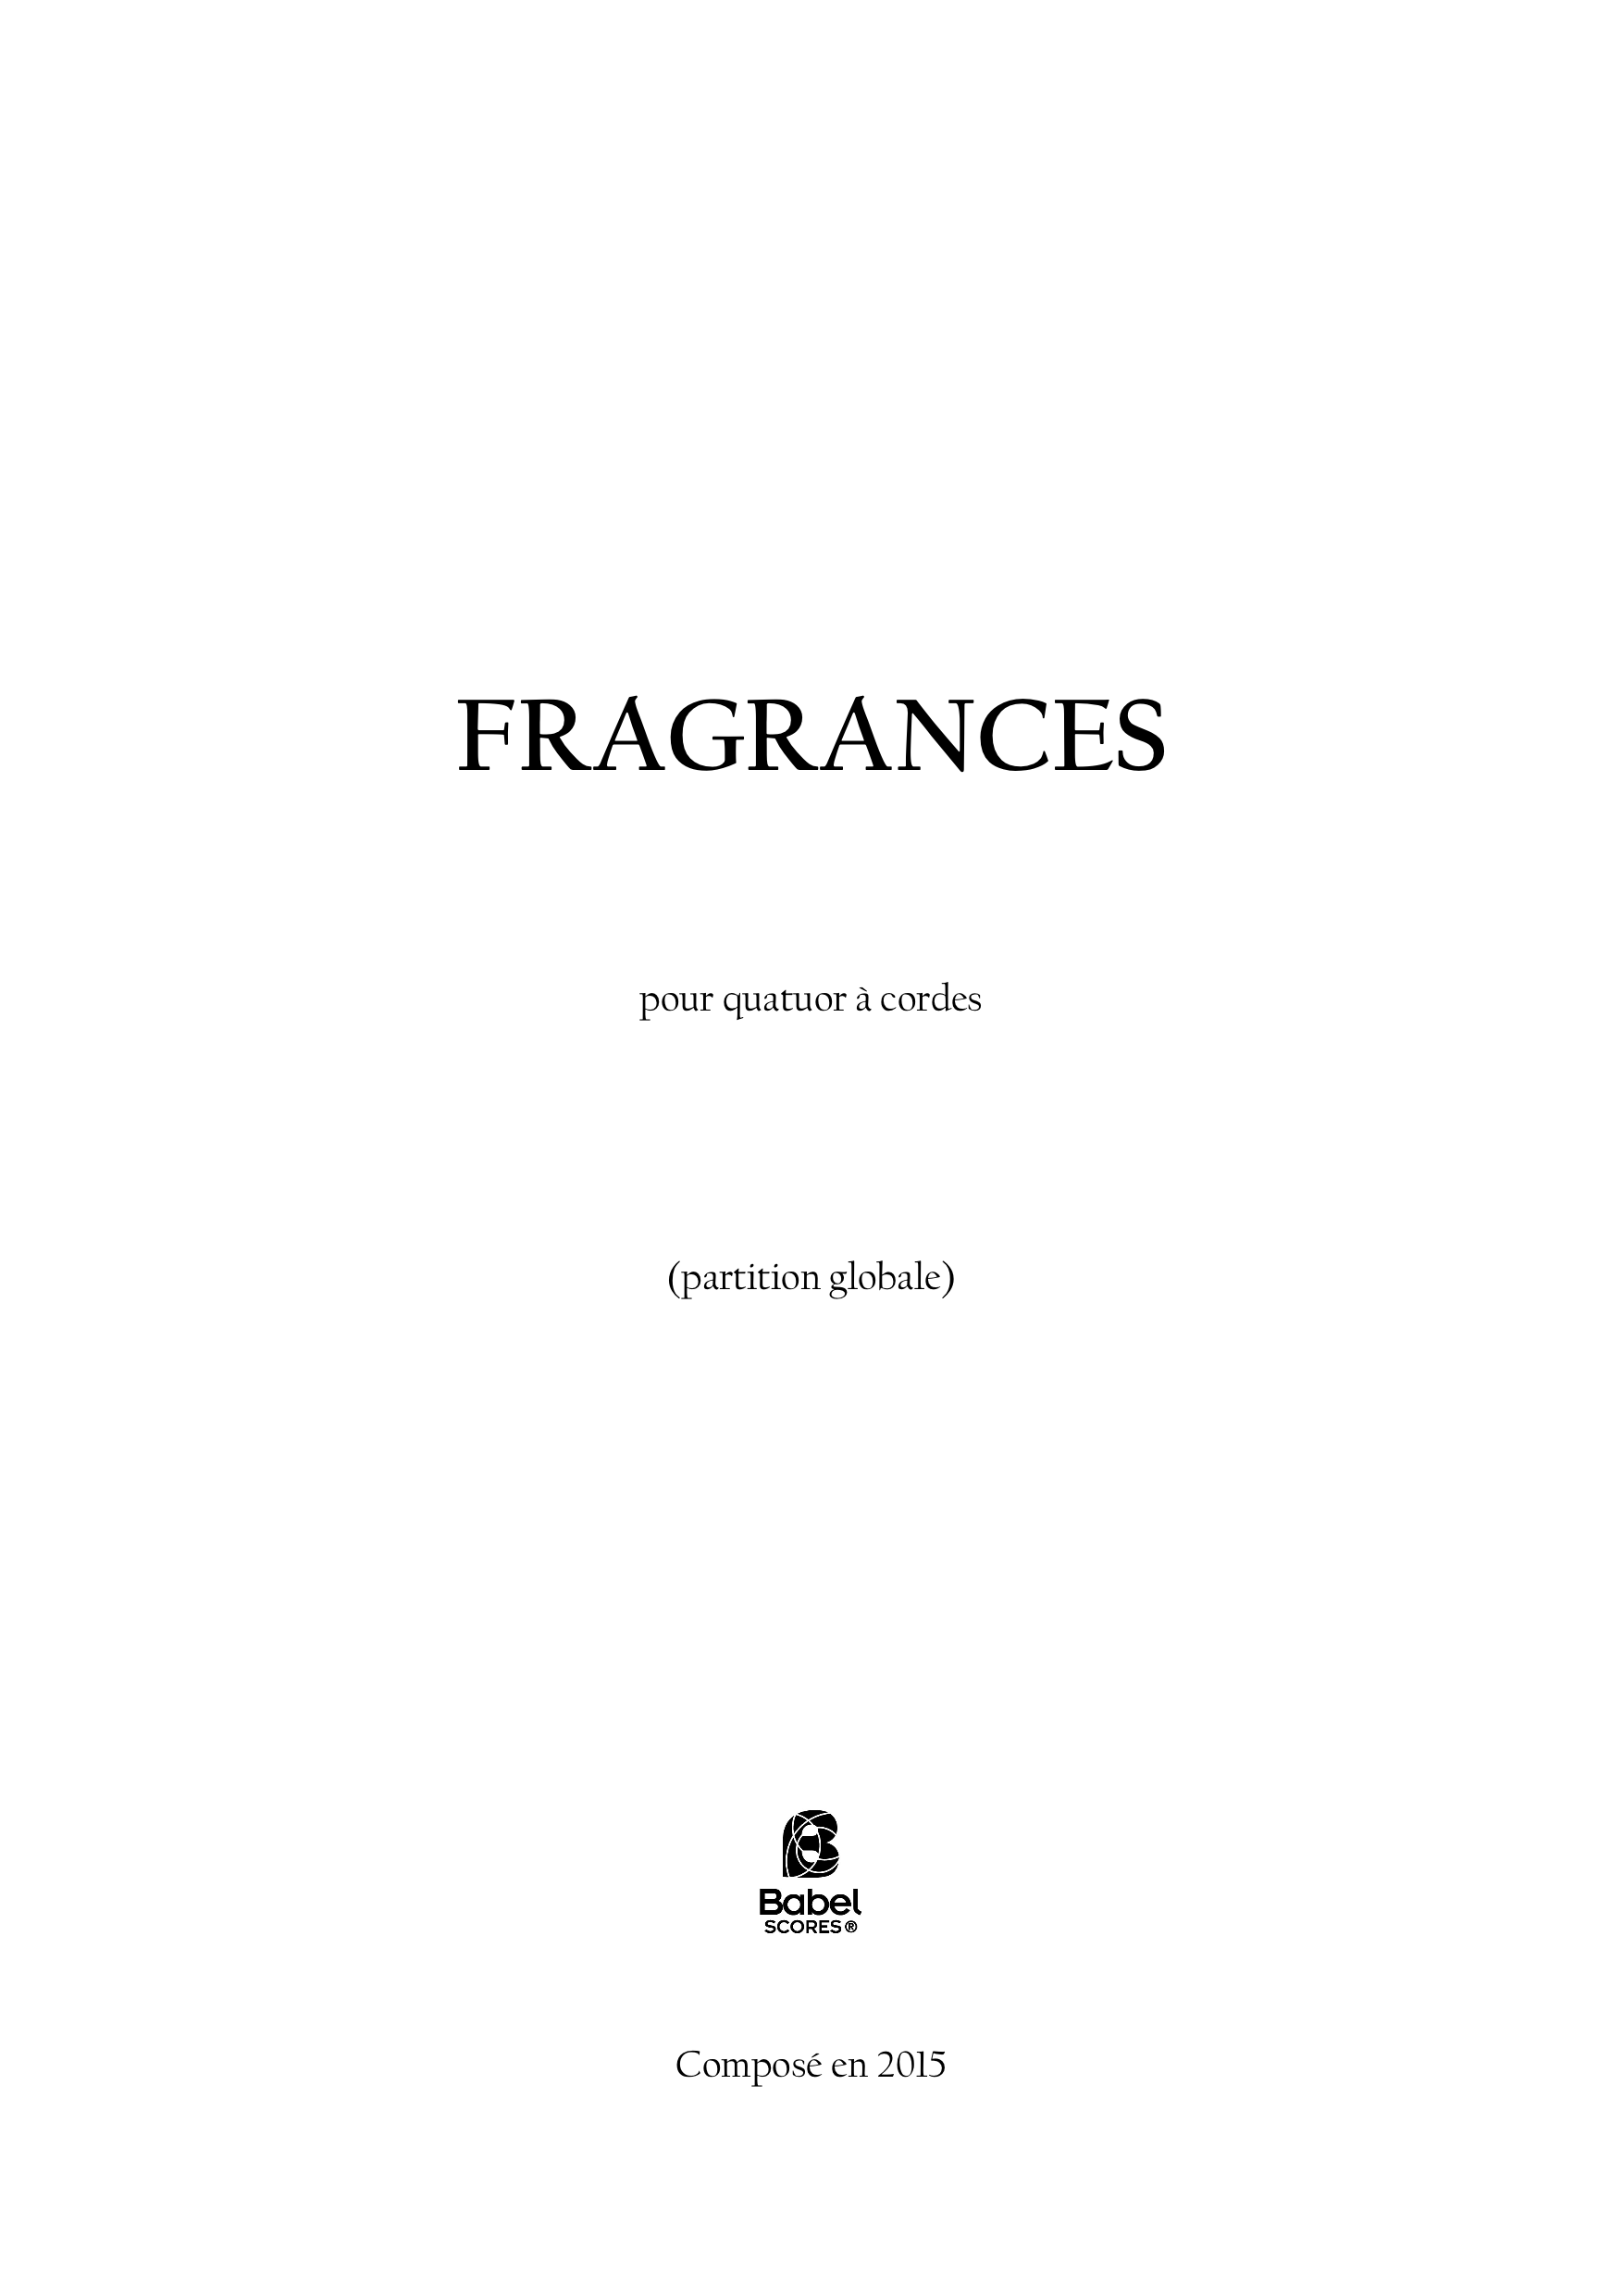 Fragrances first movement A3 z 2 1 73